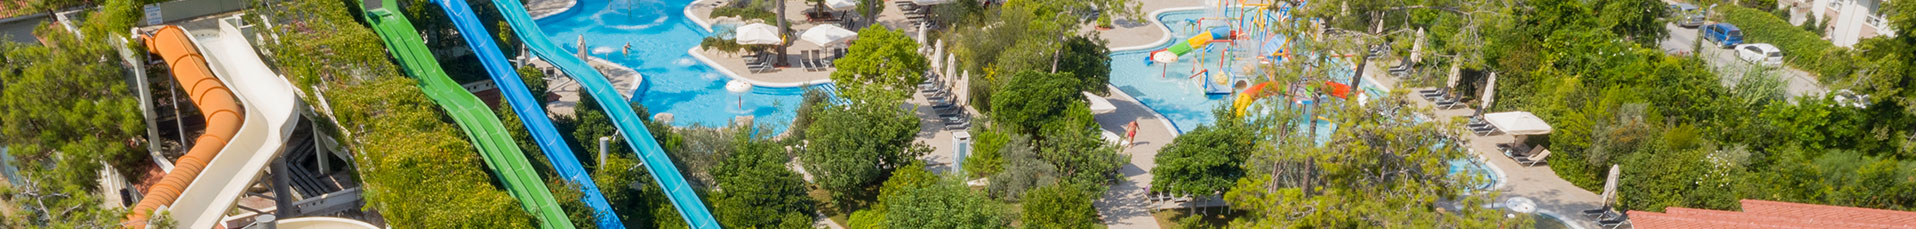 Ali Bey Resort Sorgun - Aqua Park